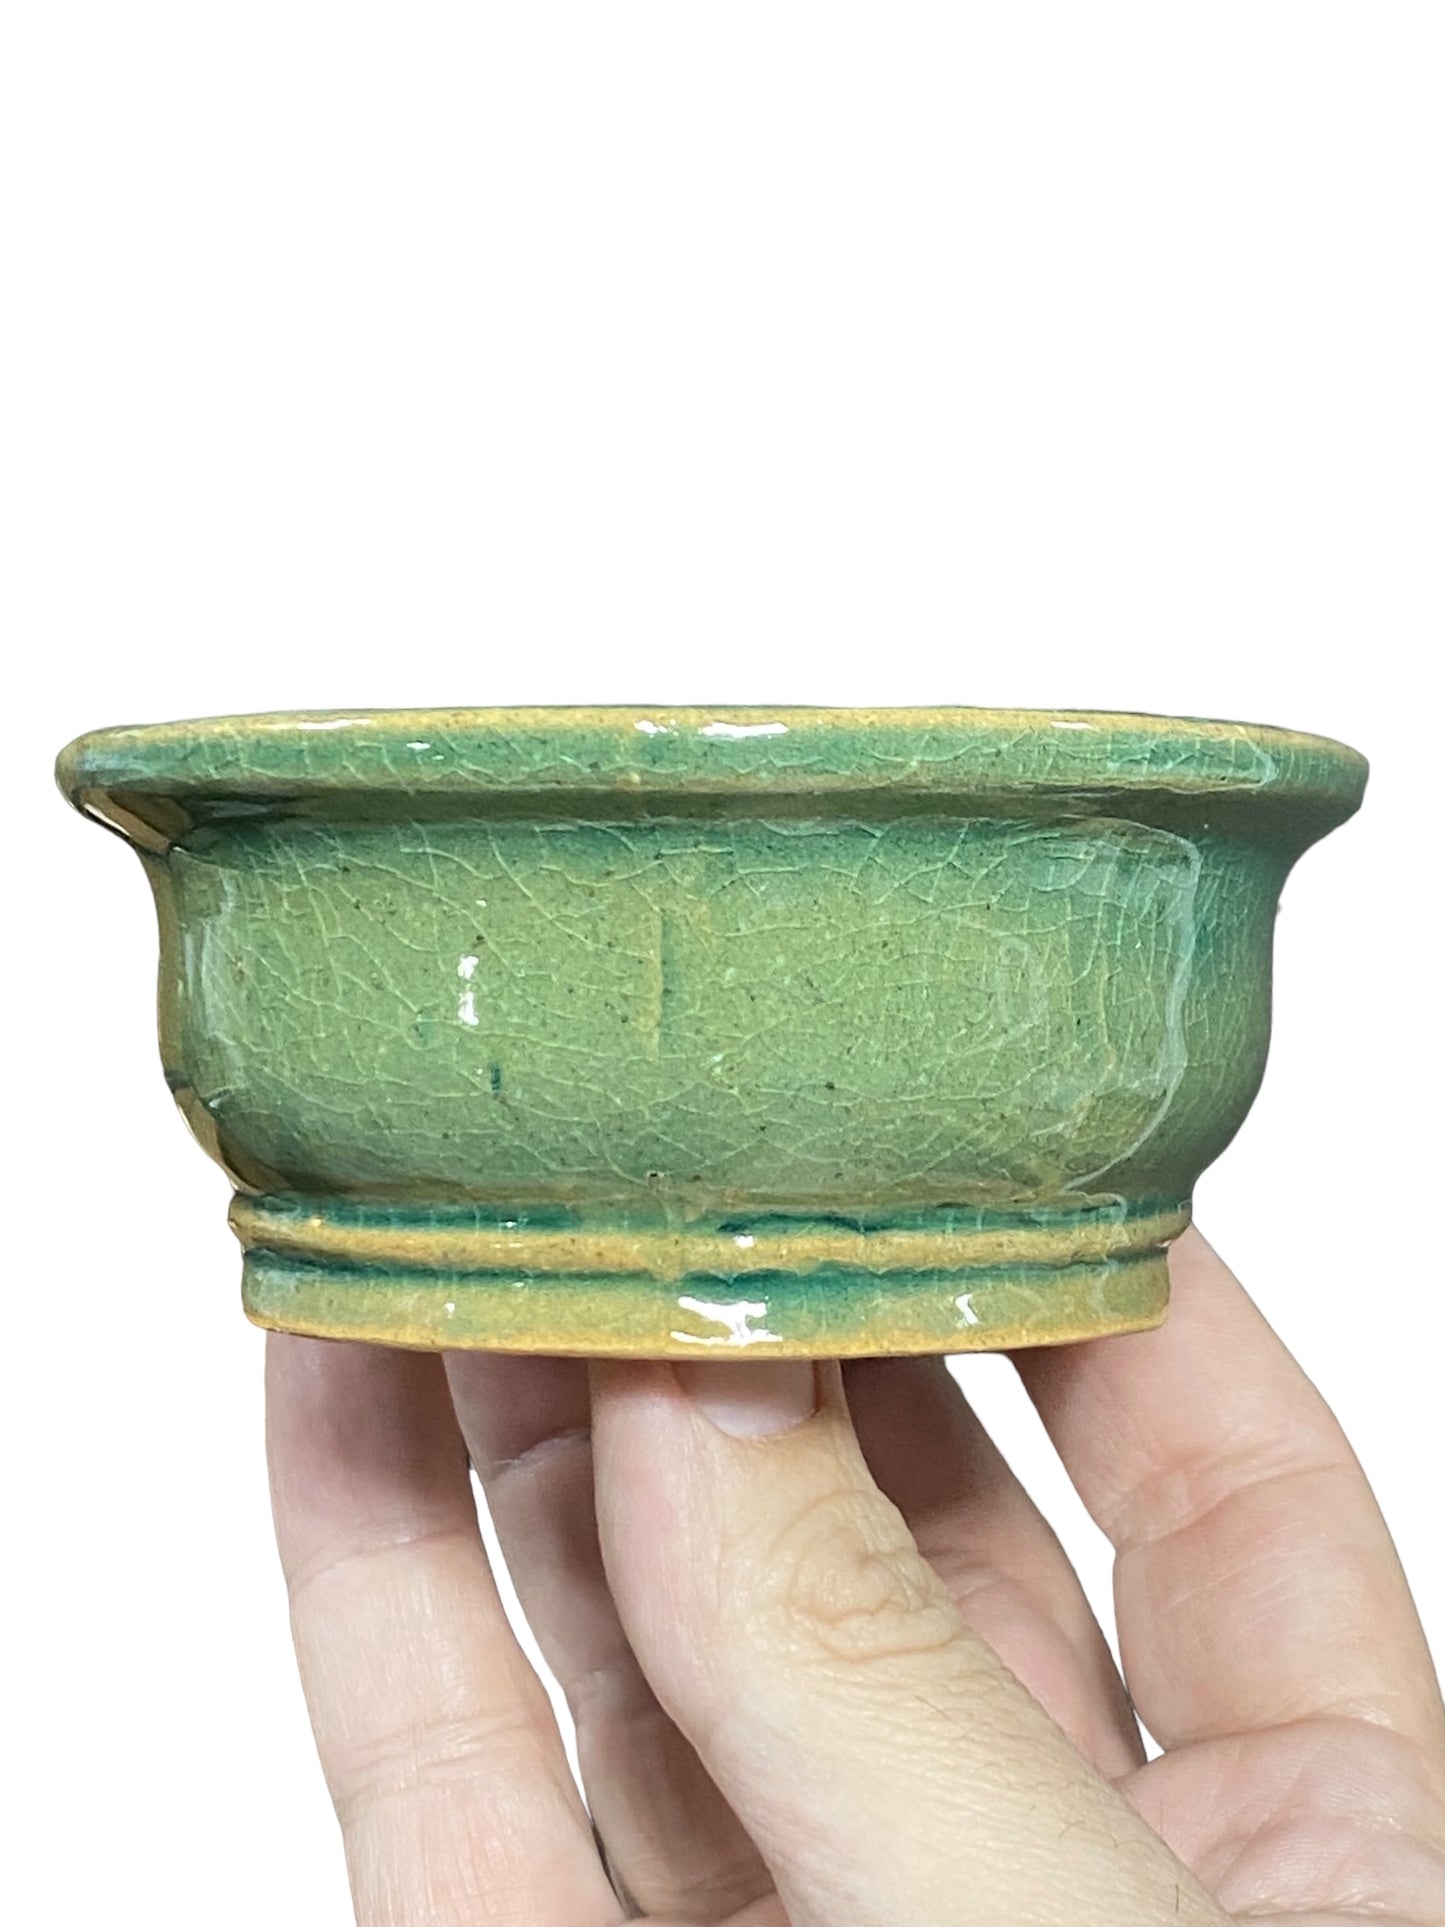 Shibakatsu - Stellar Crackle Glazed Oval Style Bonsai Pot (5" wide)